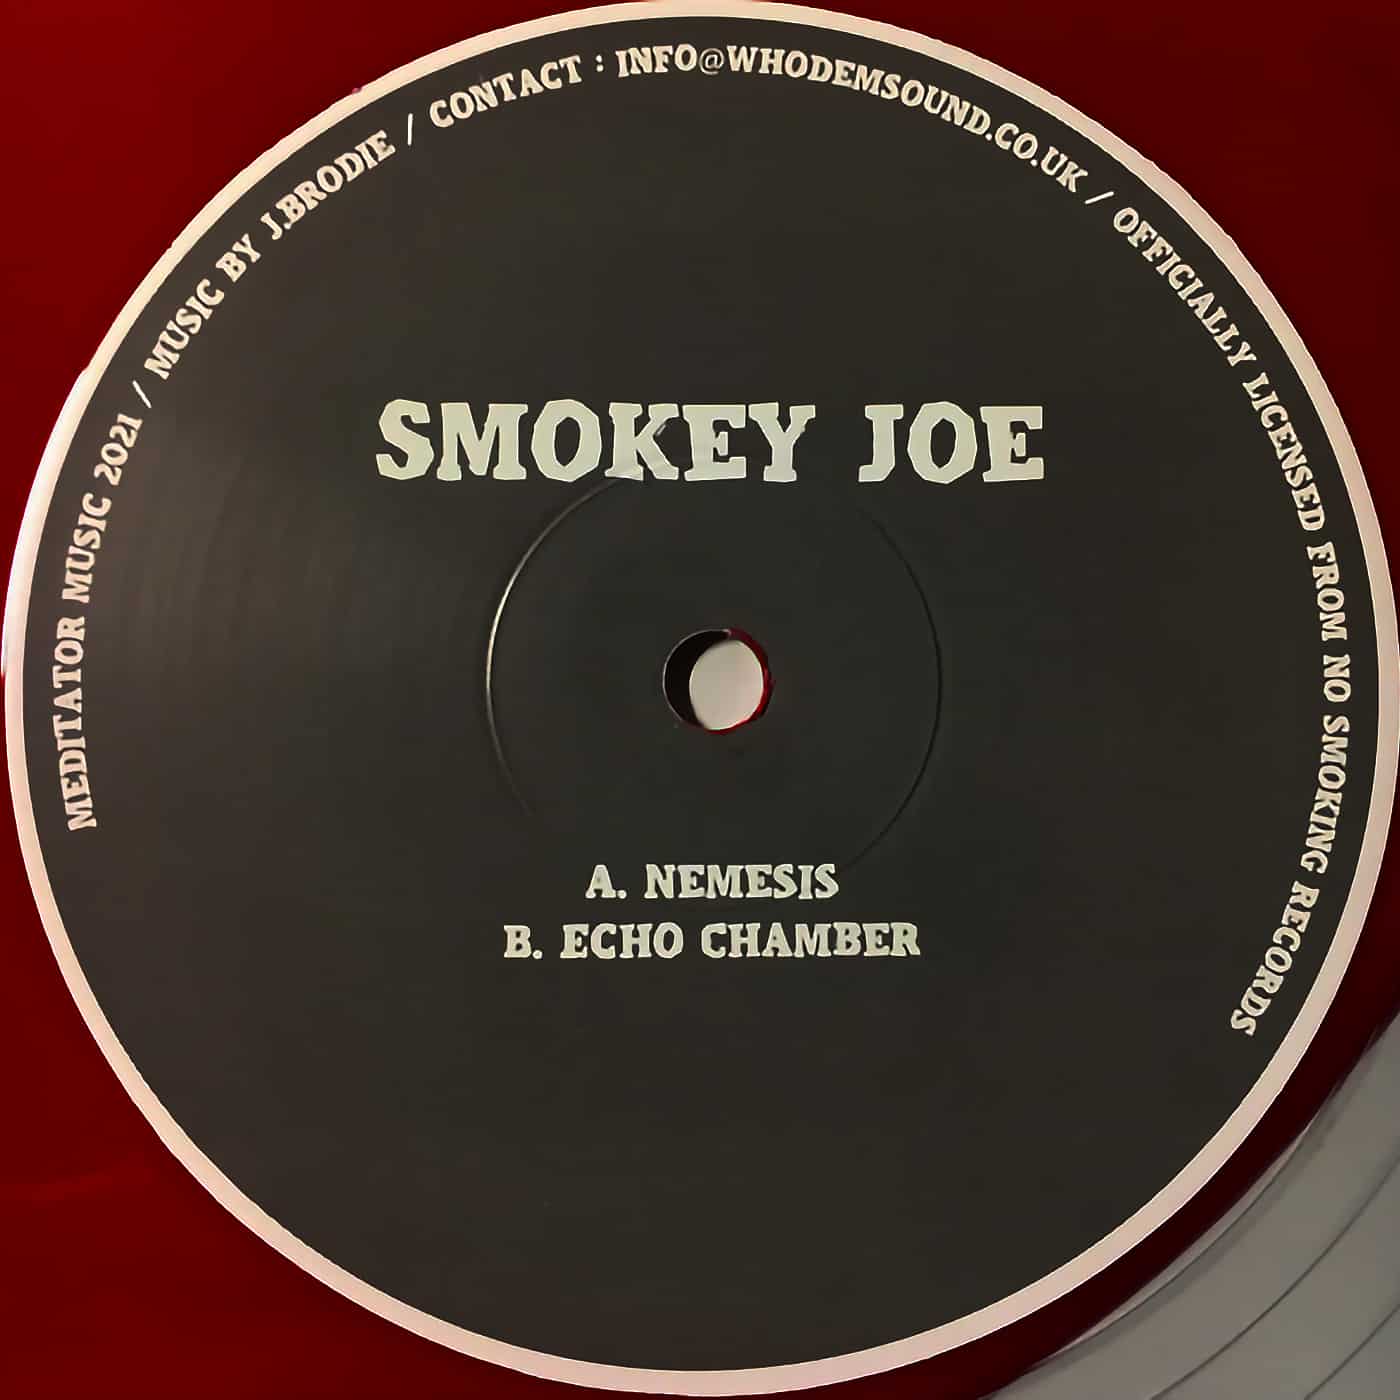 Download Smokey Joe - Nemesis / Echo Chamber on Electrobuzz